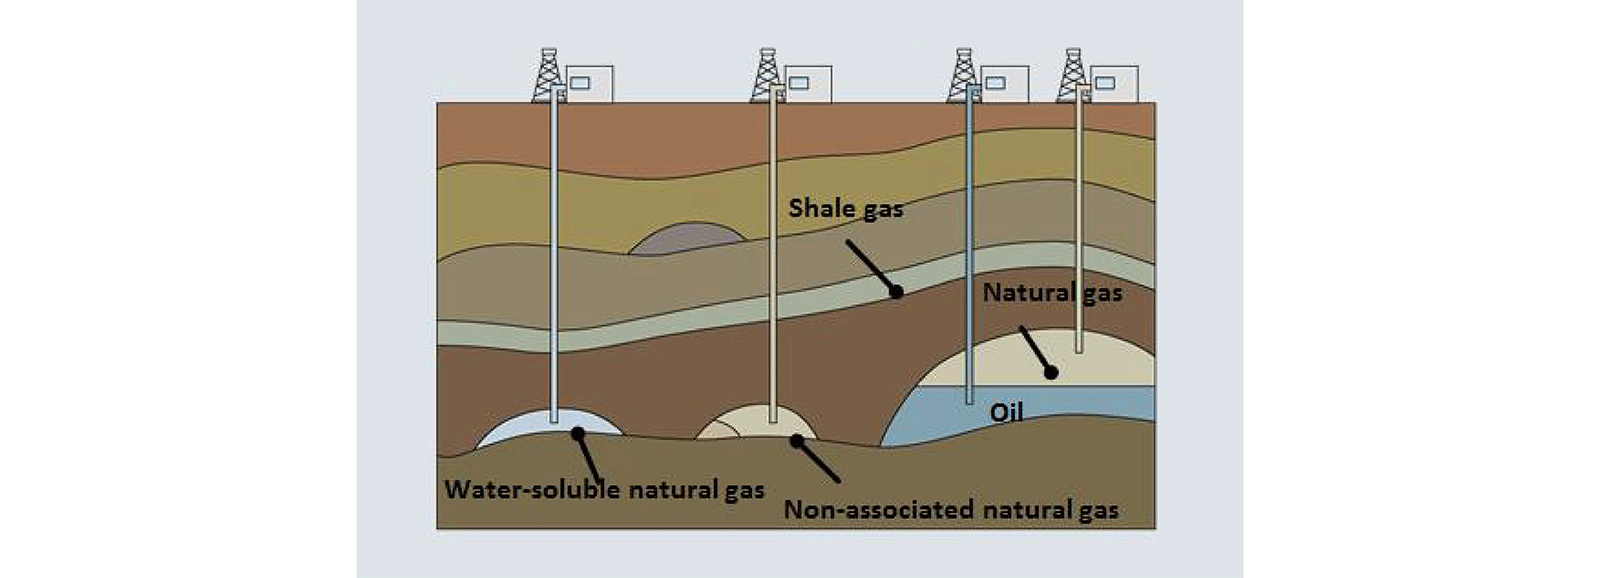 Extracción de gas natural convencional